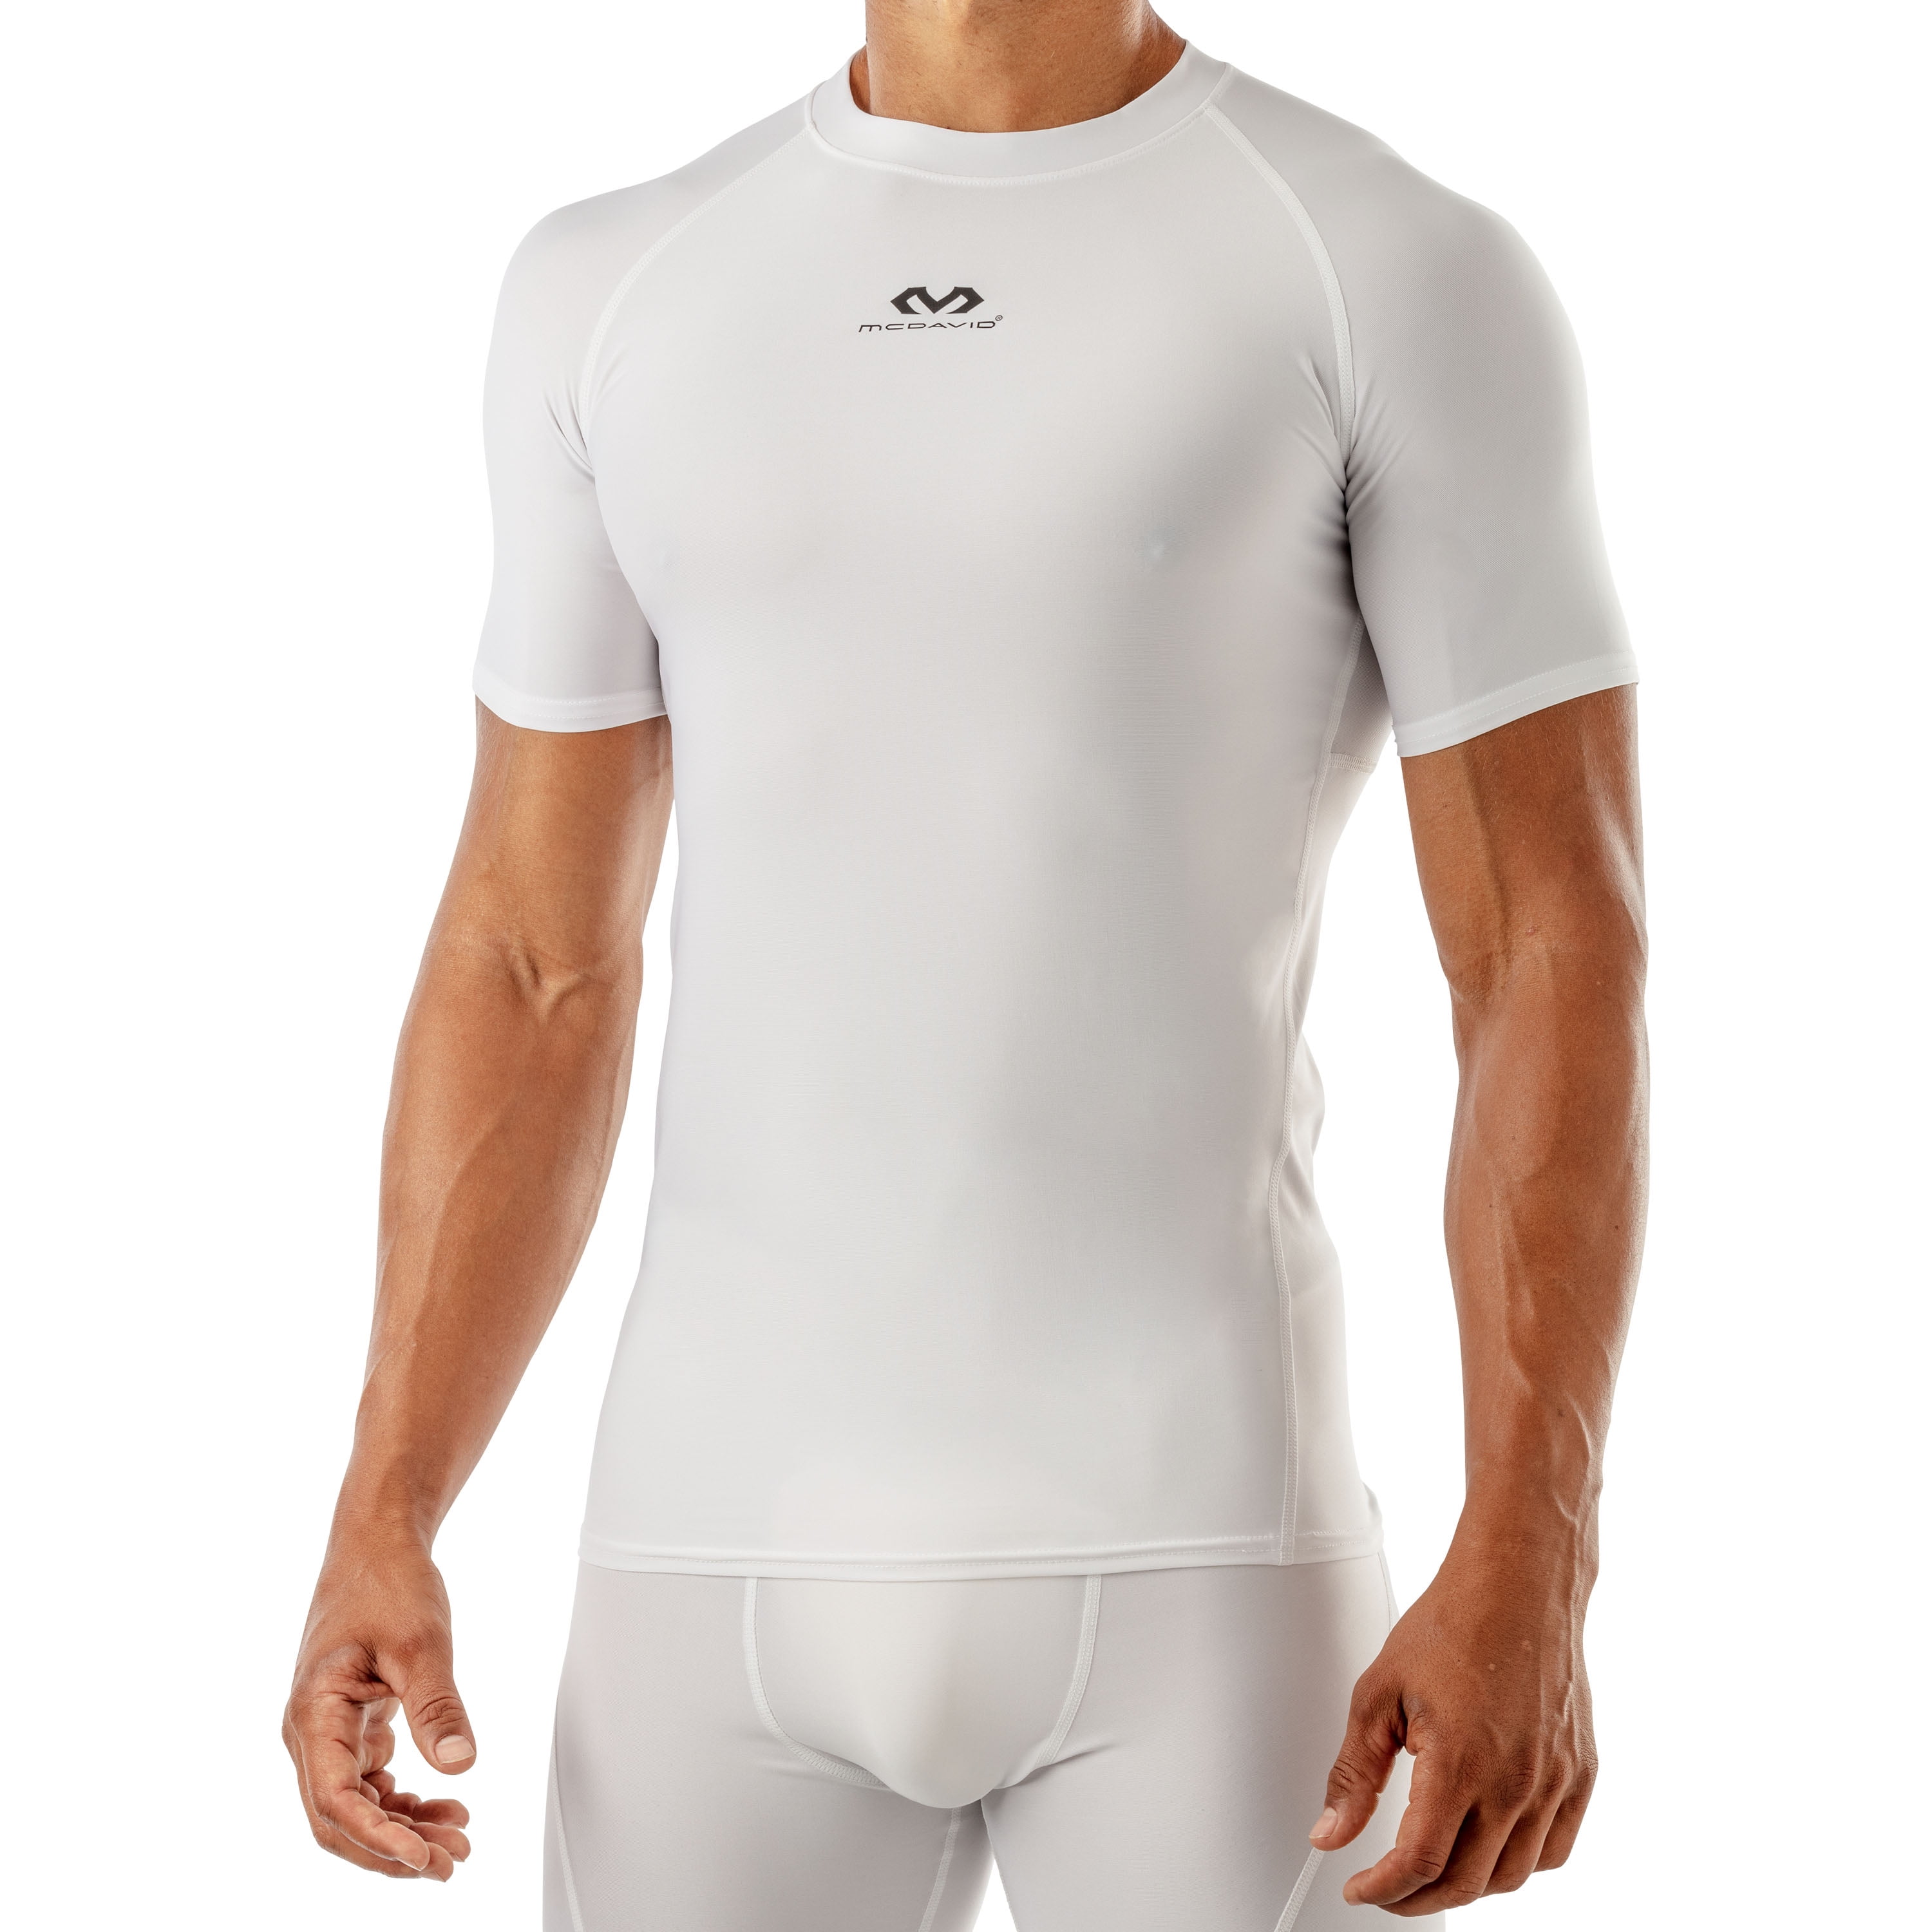 New McDavid Longsleeve Compression Shirt, Model 794, Adult, White